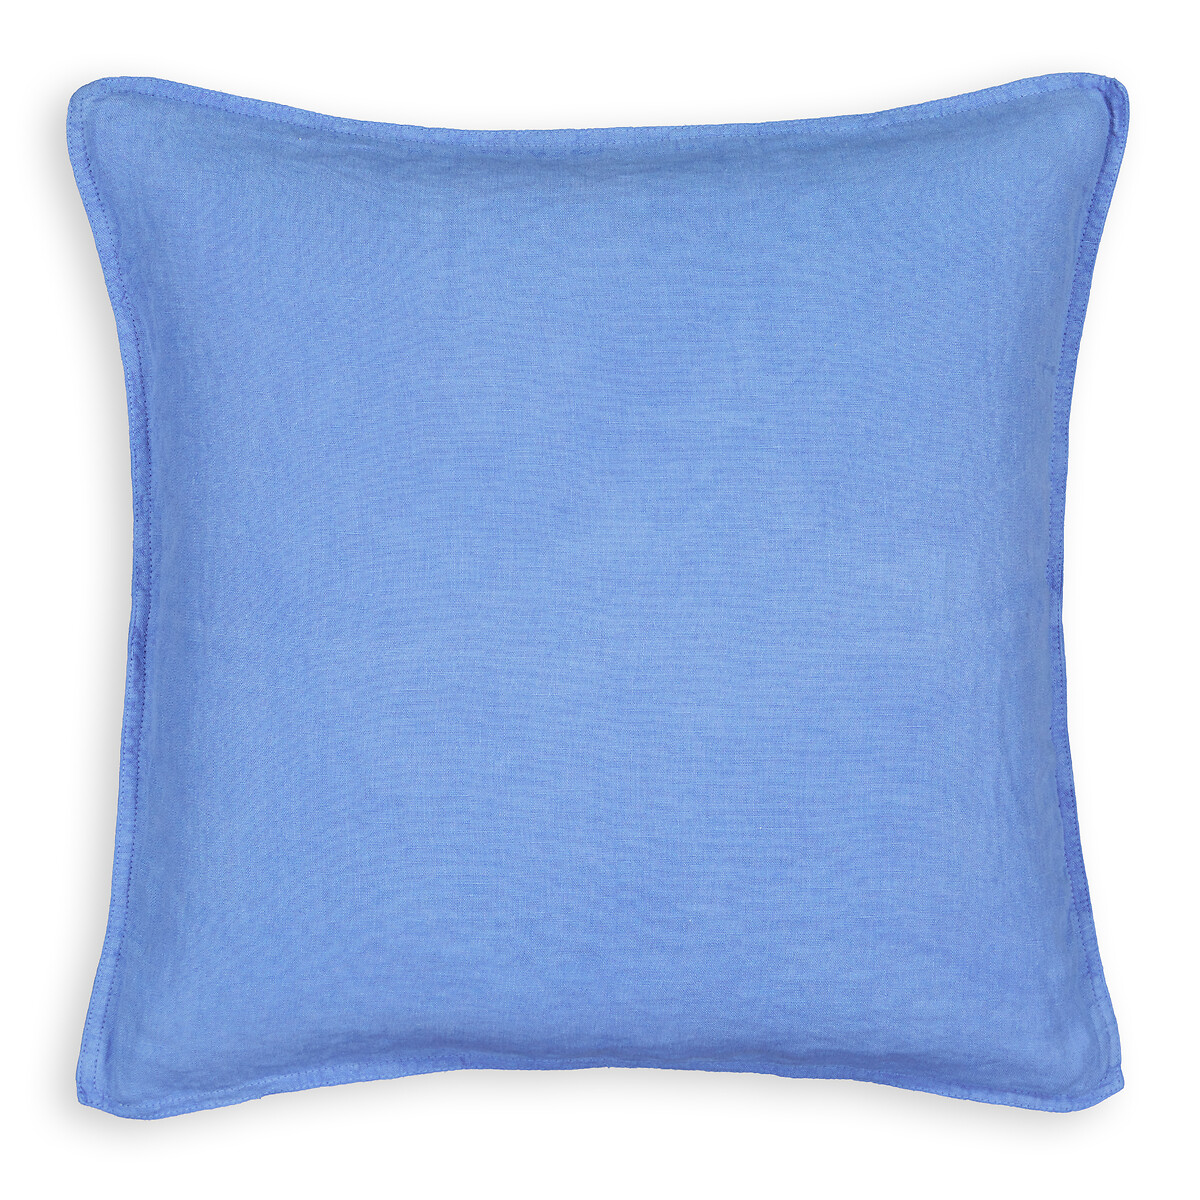 Чехол На подушку 40 x 40 см осветленный лен Linot 40 x 40 см синий LaRedoute, размер 40 x 40 см